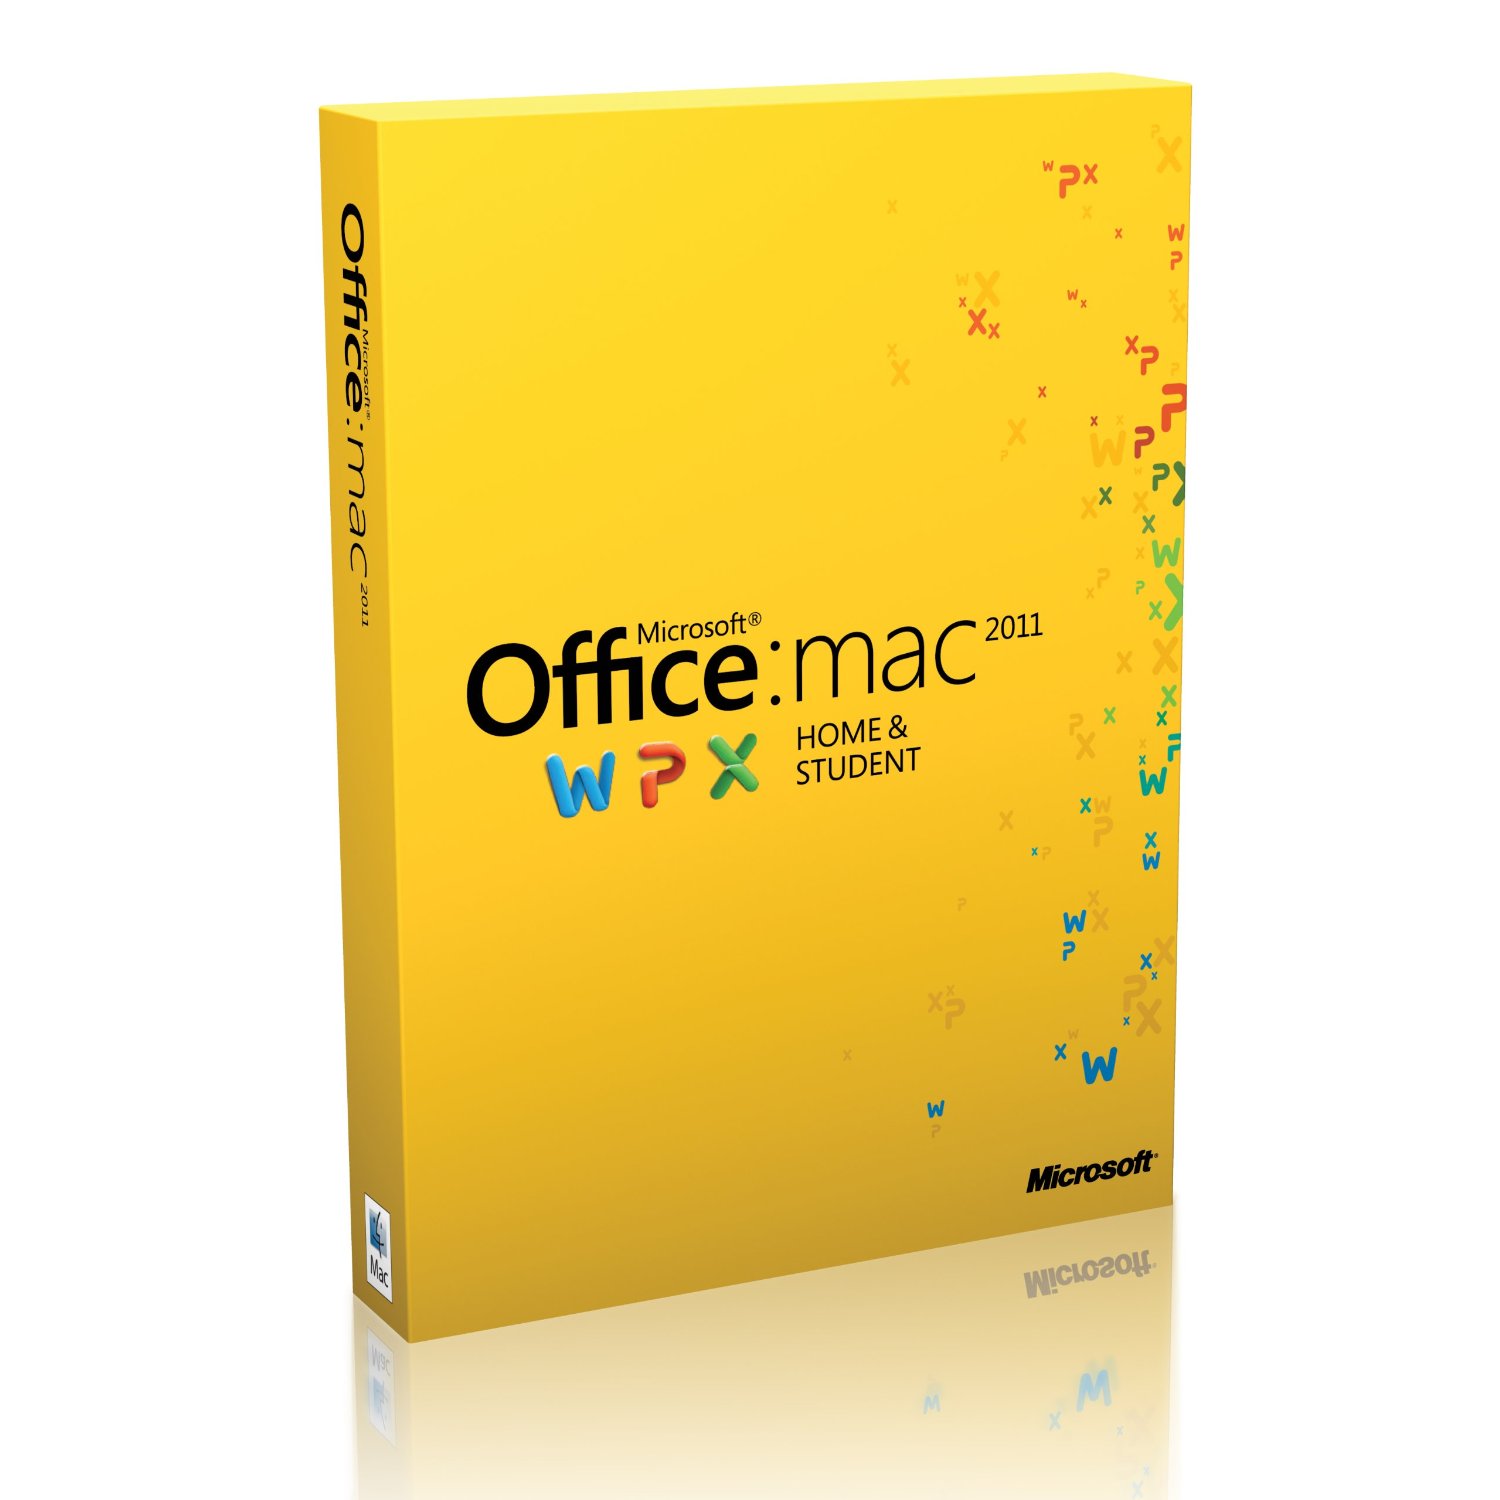 Uf microsoft office mac download windows 10